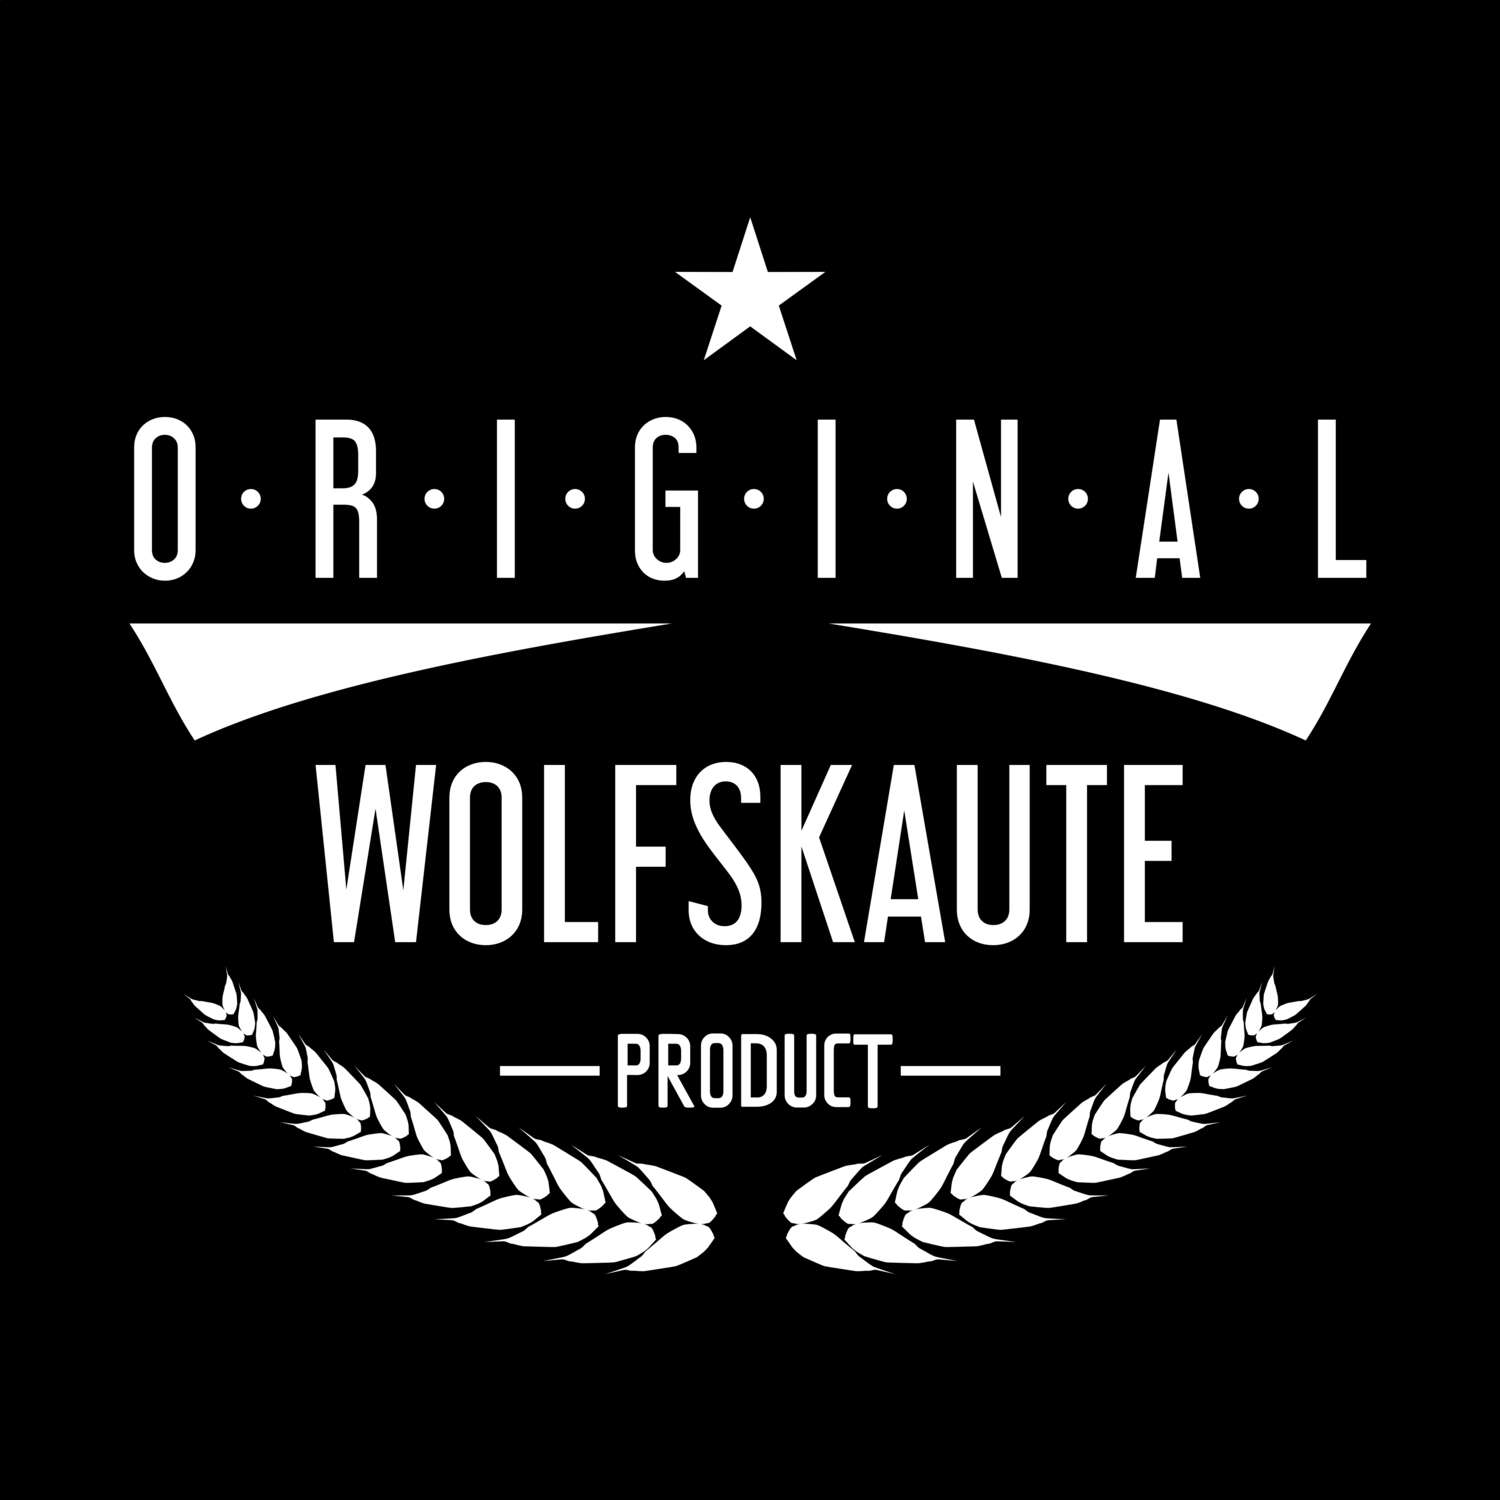 Wolfskaute T-Shirt »Original Product«